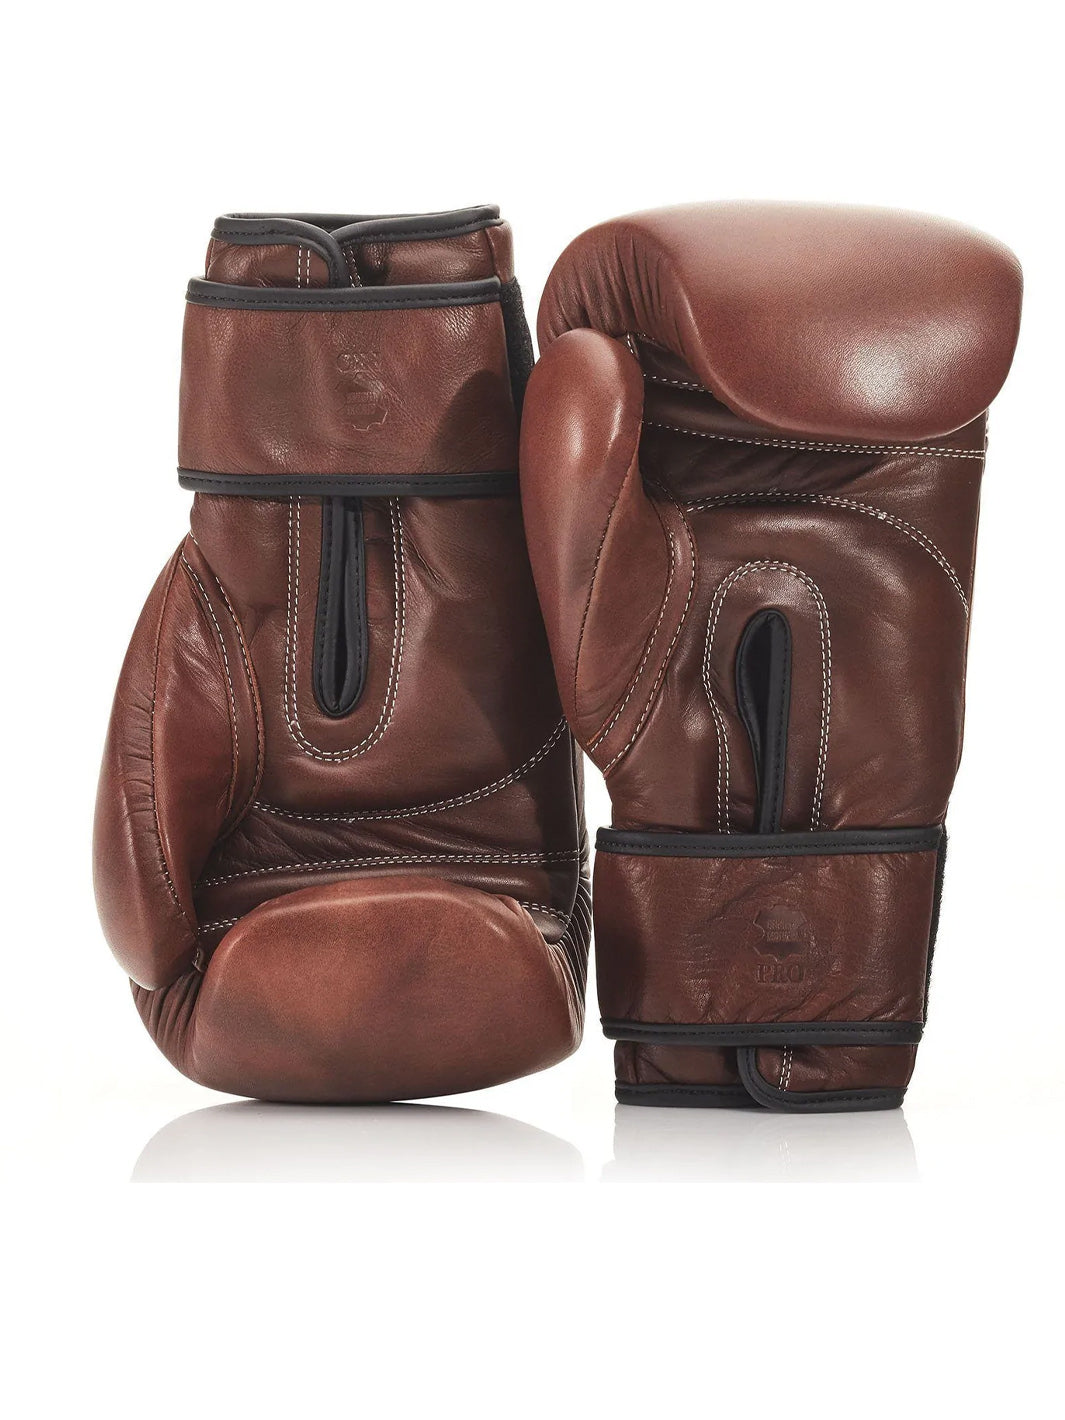 MVP Pro Boxing Gloves - Brown